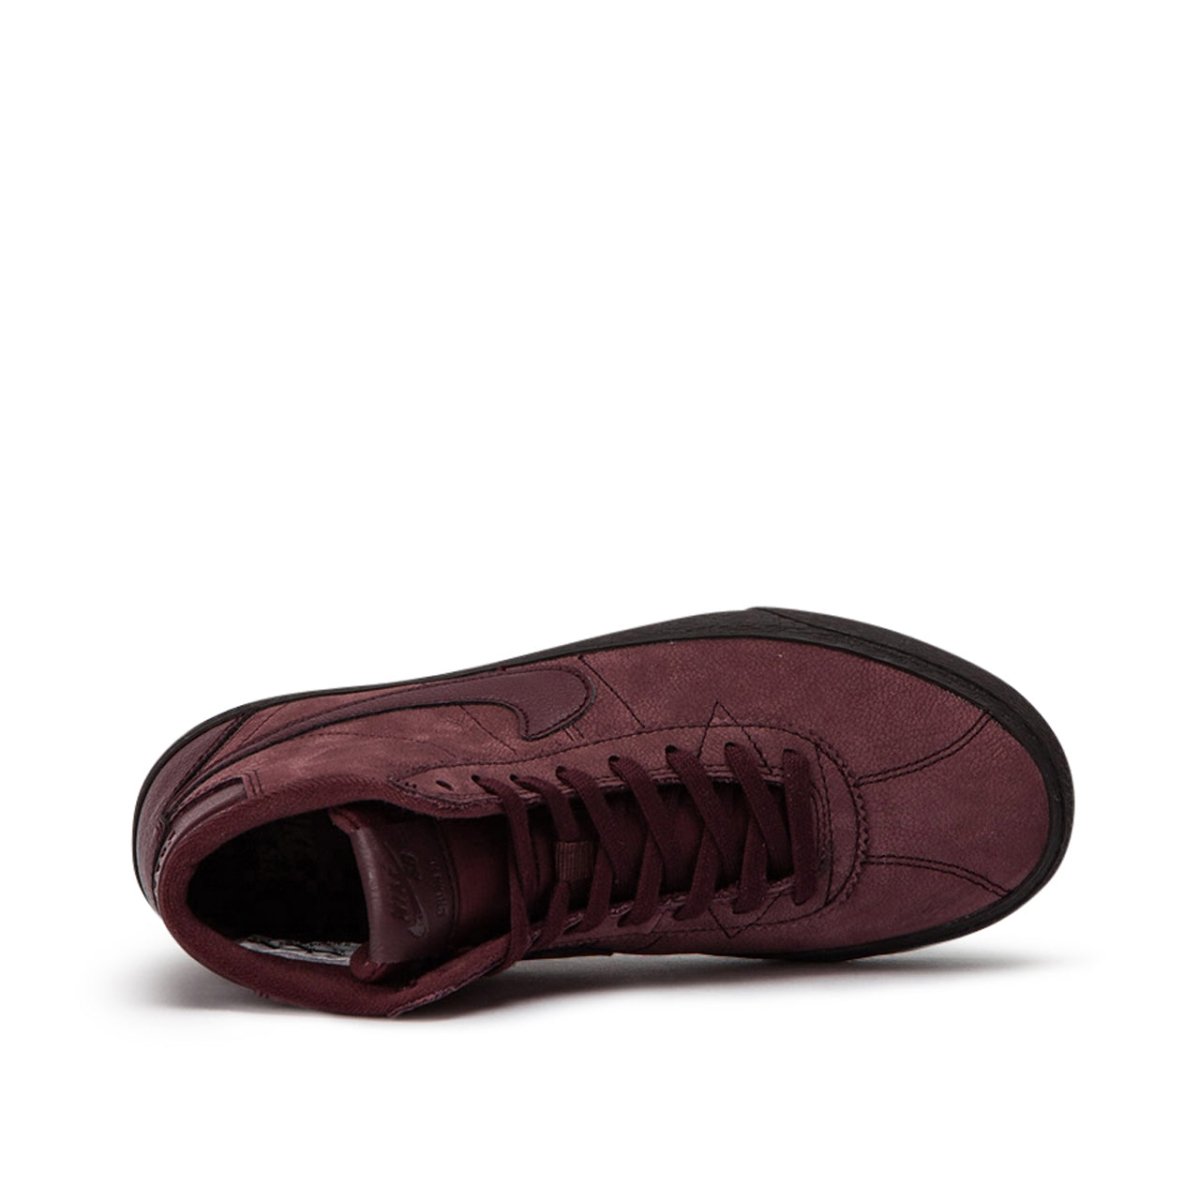 Nike WMNS SB Bruin Hi Premium (Burgundy)  - Allike Store